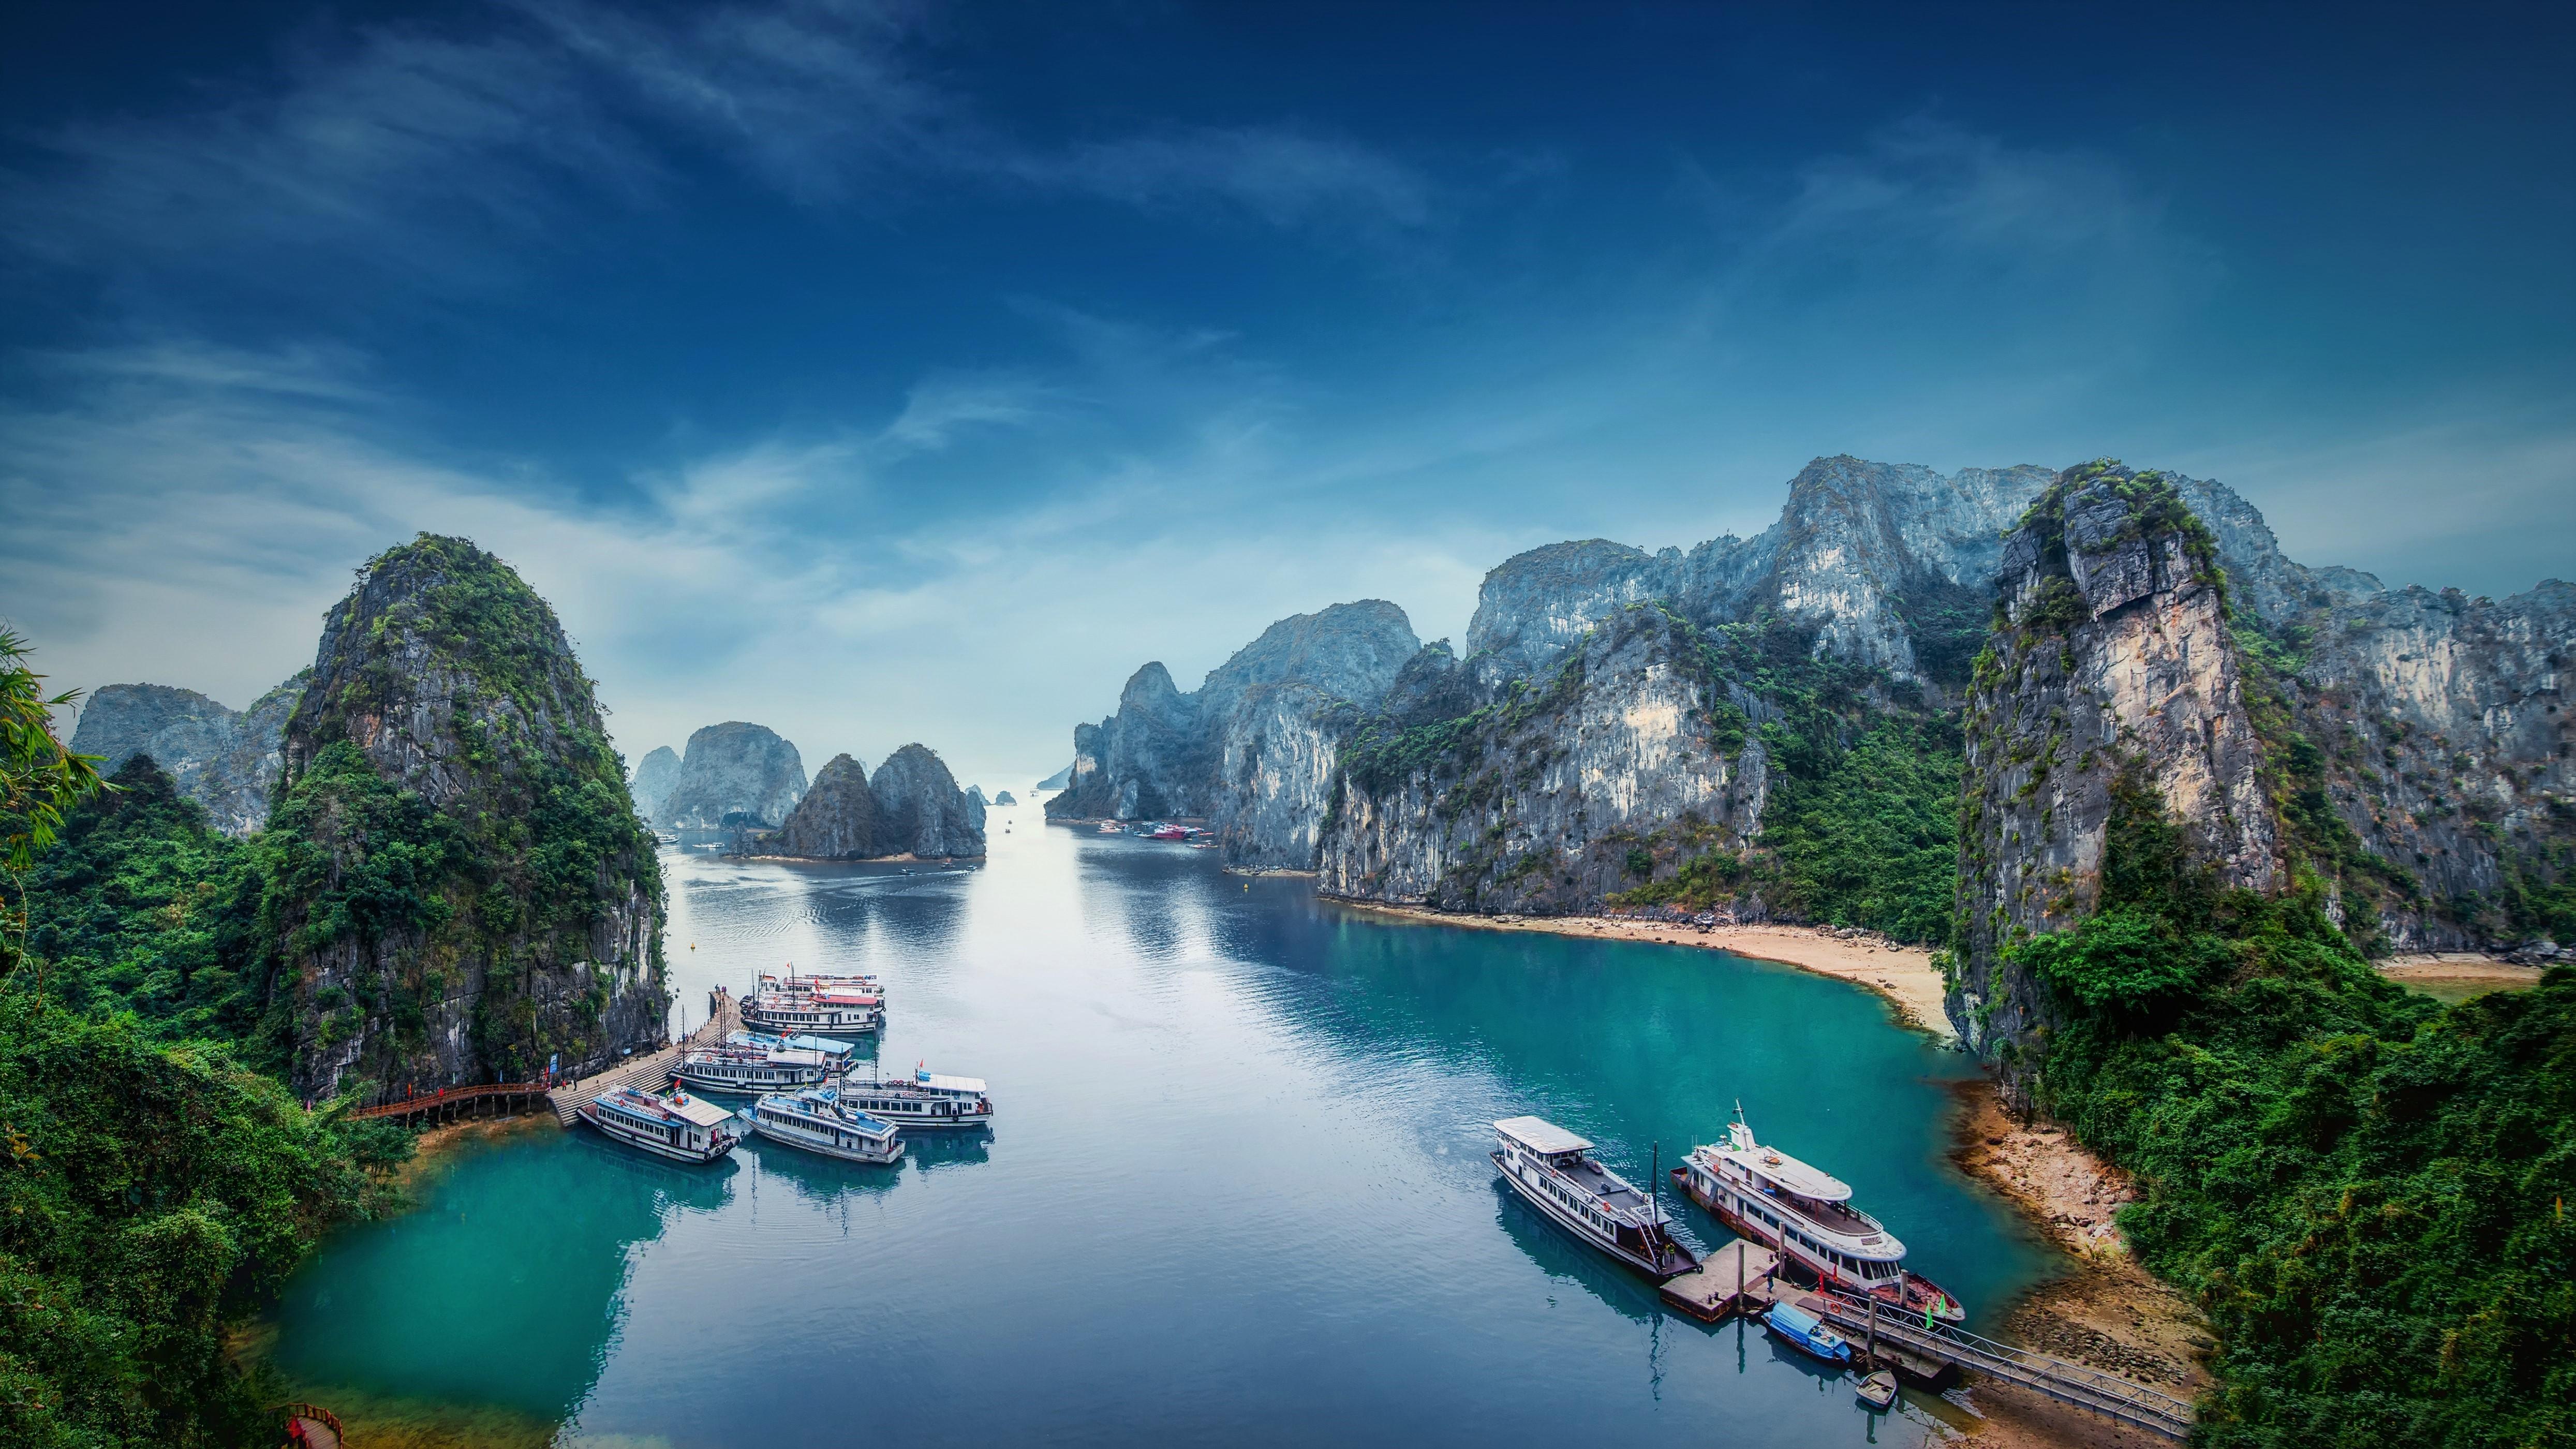 Halong Bay in Vietnam 4k Ultra HD Wallpaper. Background Image